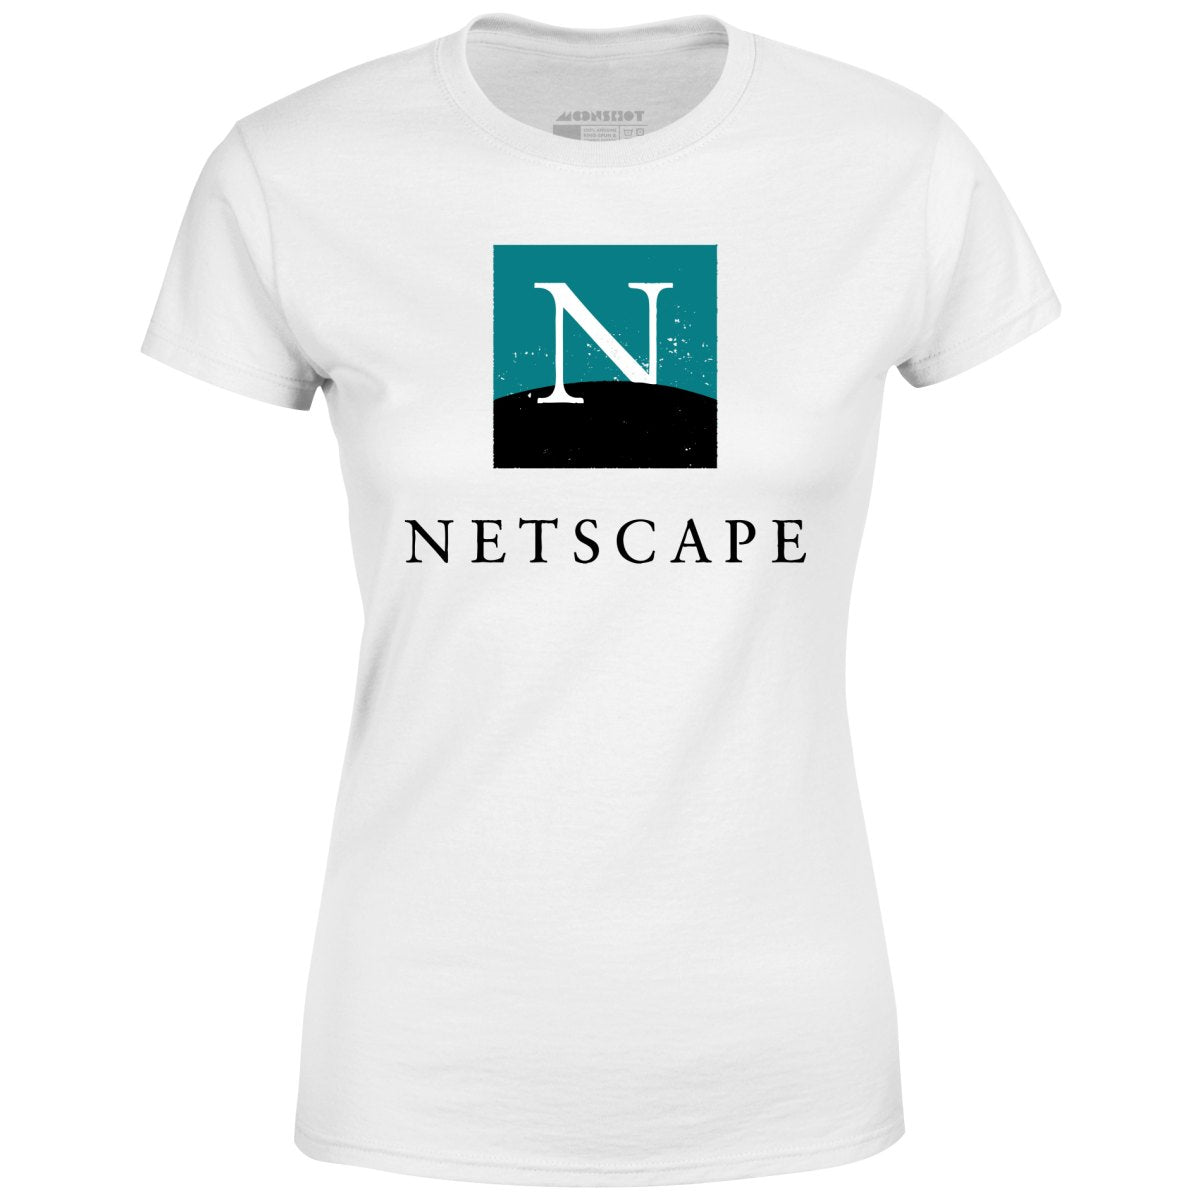 Netscape - Vintage Internet - Women's T-Shirt